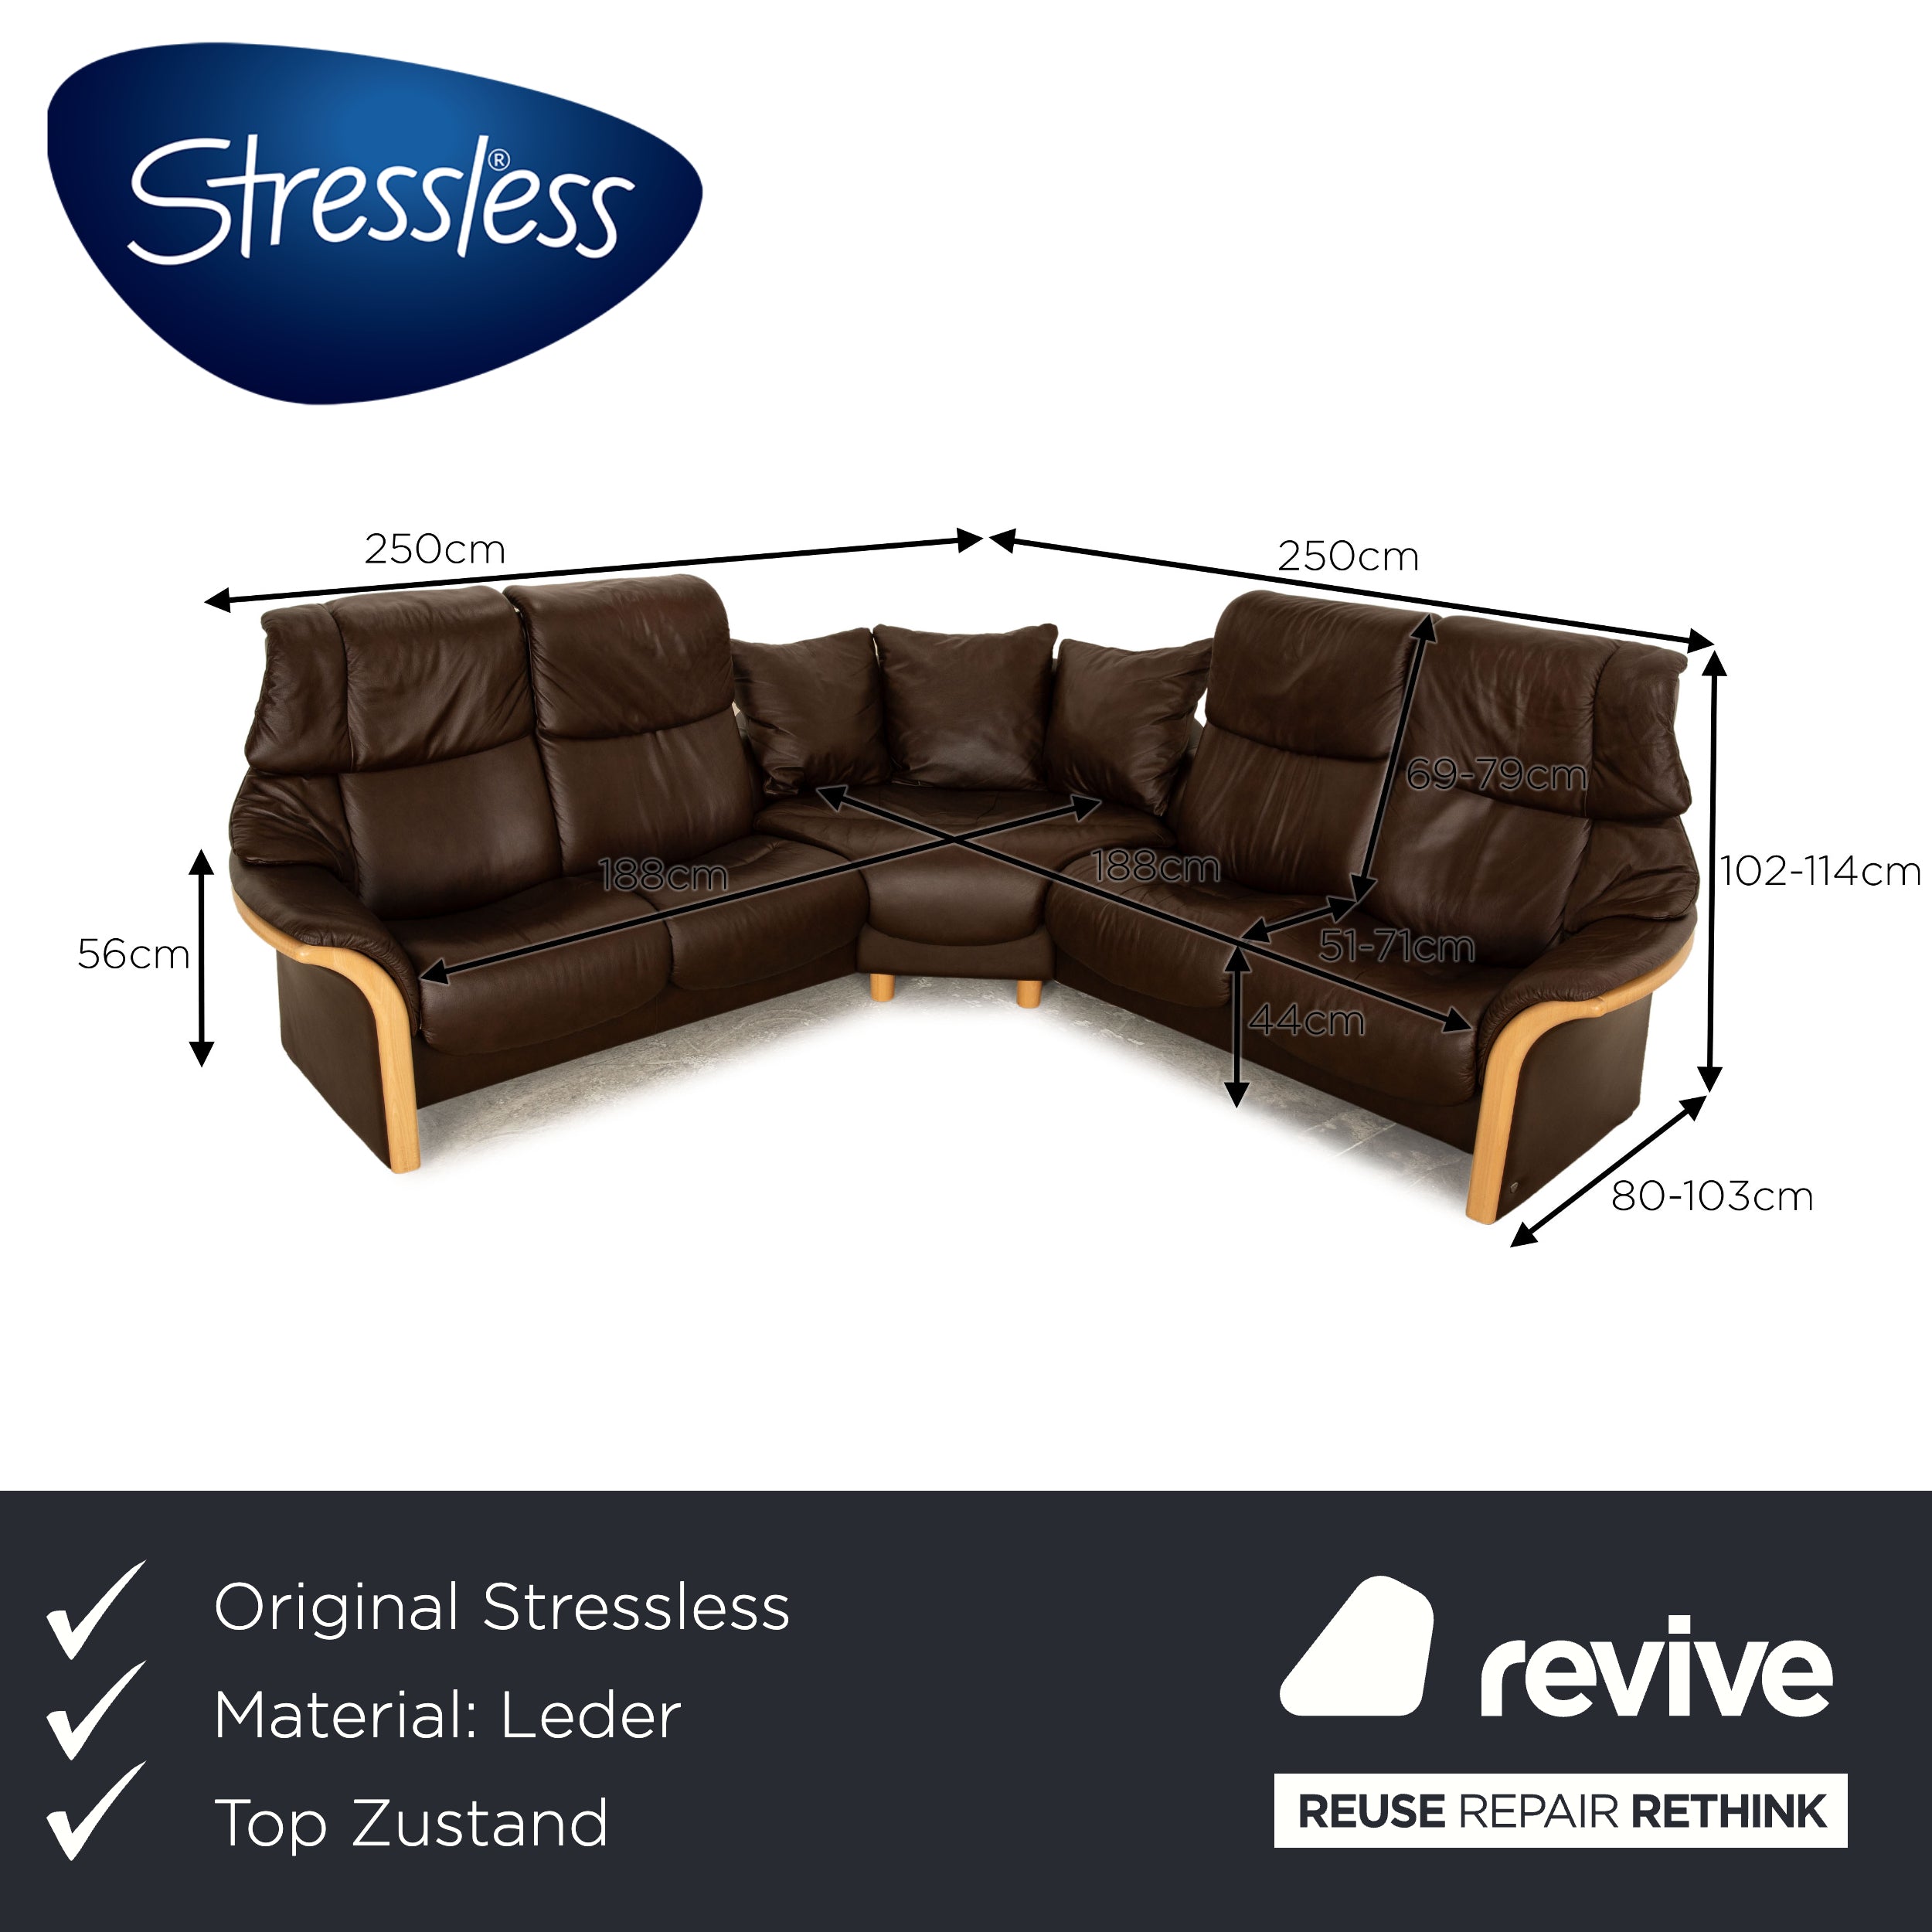 Stressless Eldorado Leather Corner Sofa Brown Sofa Couch manual function